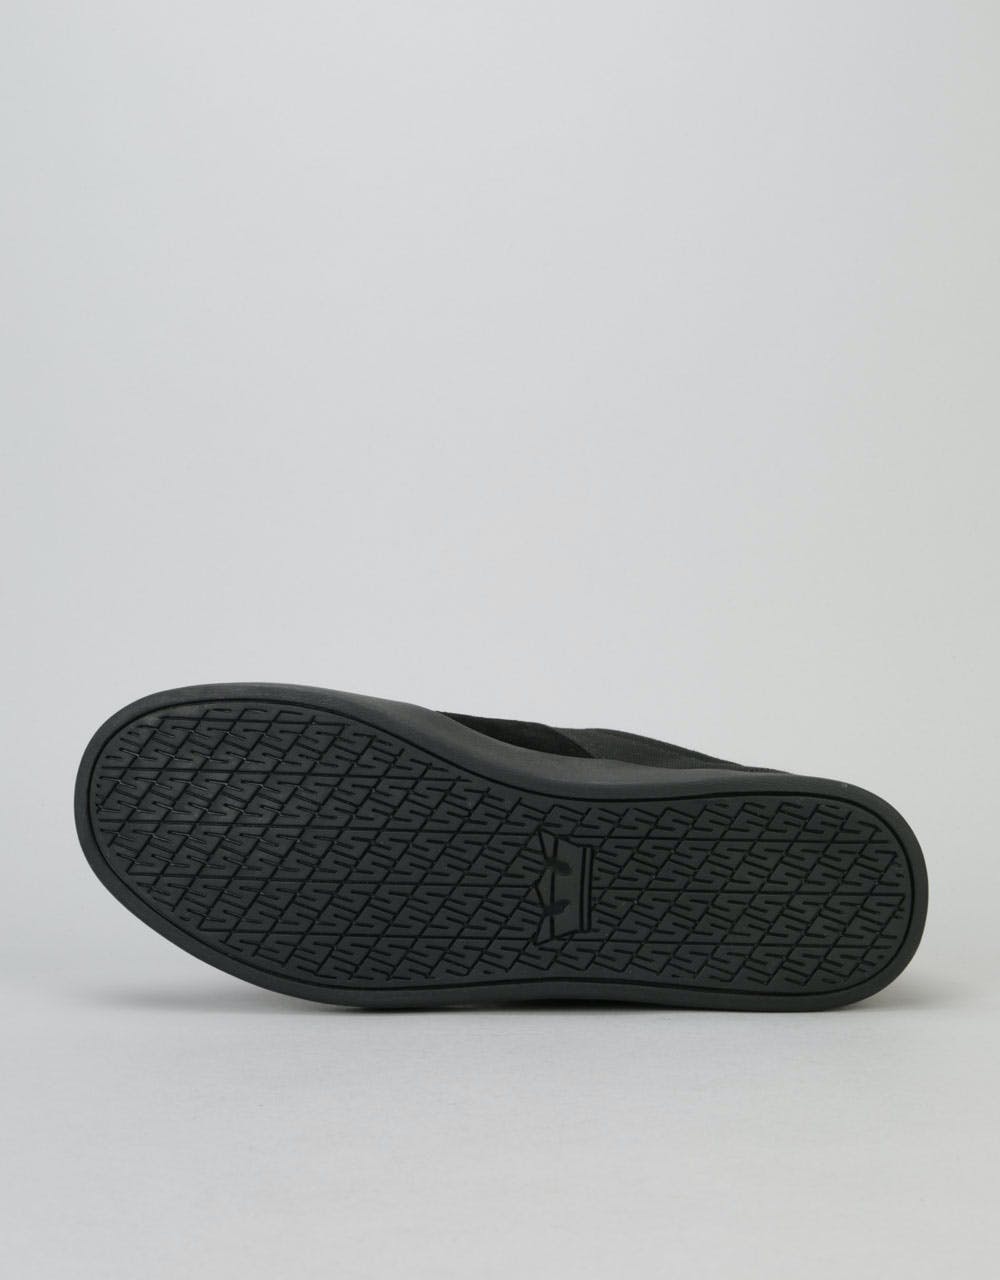 Supra Stacks II Skate Shoes - Black/Black